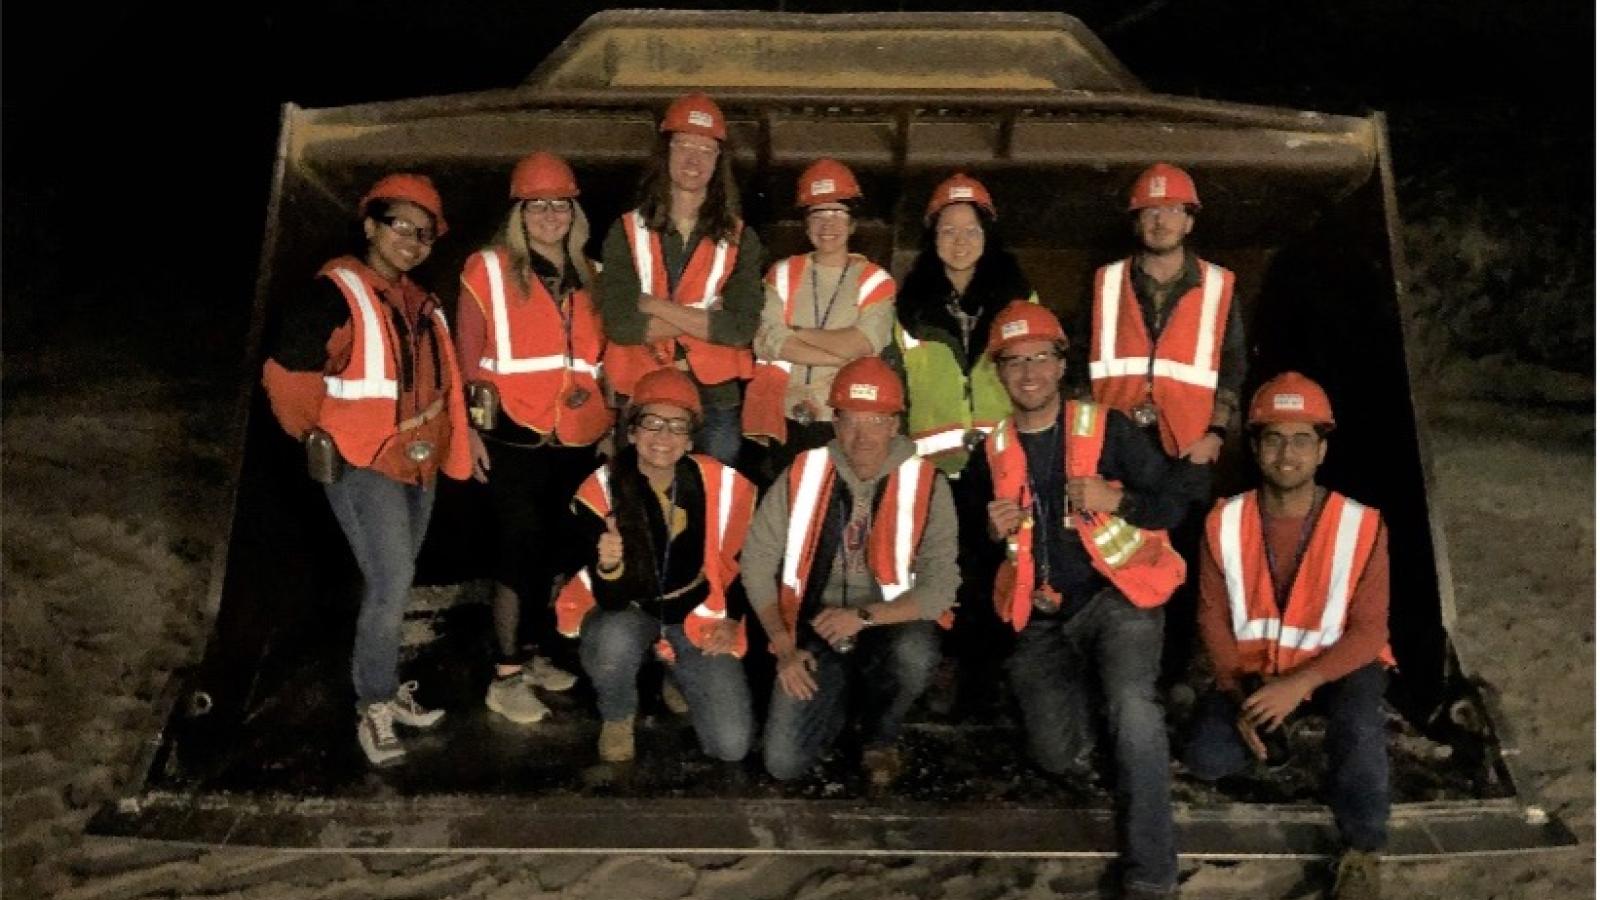 Group photo from salt mine field trip